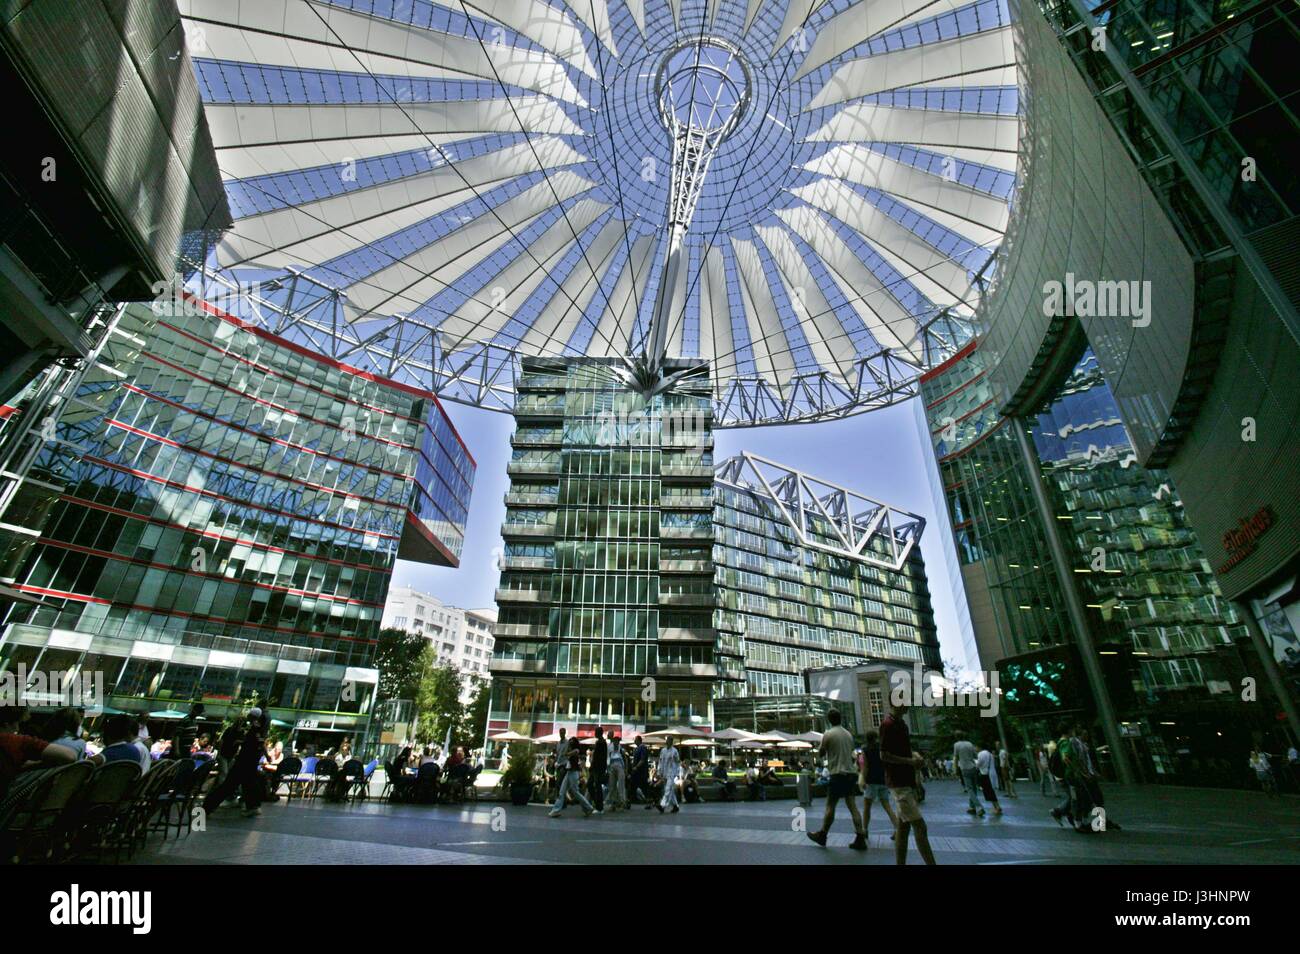 Stock Photo - Berlin, Germany.Sony Center,  JAHN designed Sony-sponsored building complex located at the Potsdamer Platz Credit: Paul Velasco/ Alamy Stock Photo